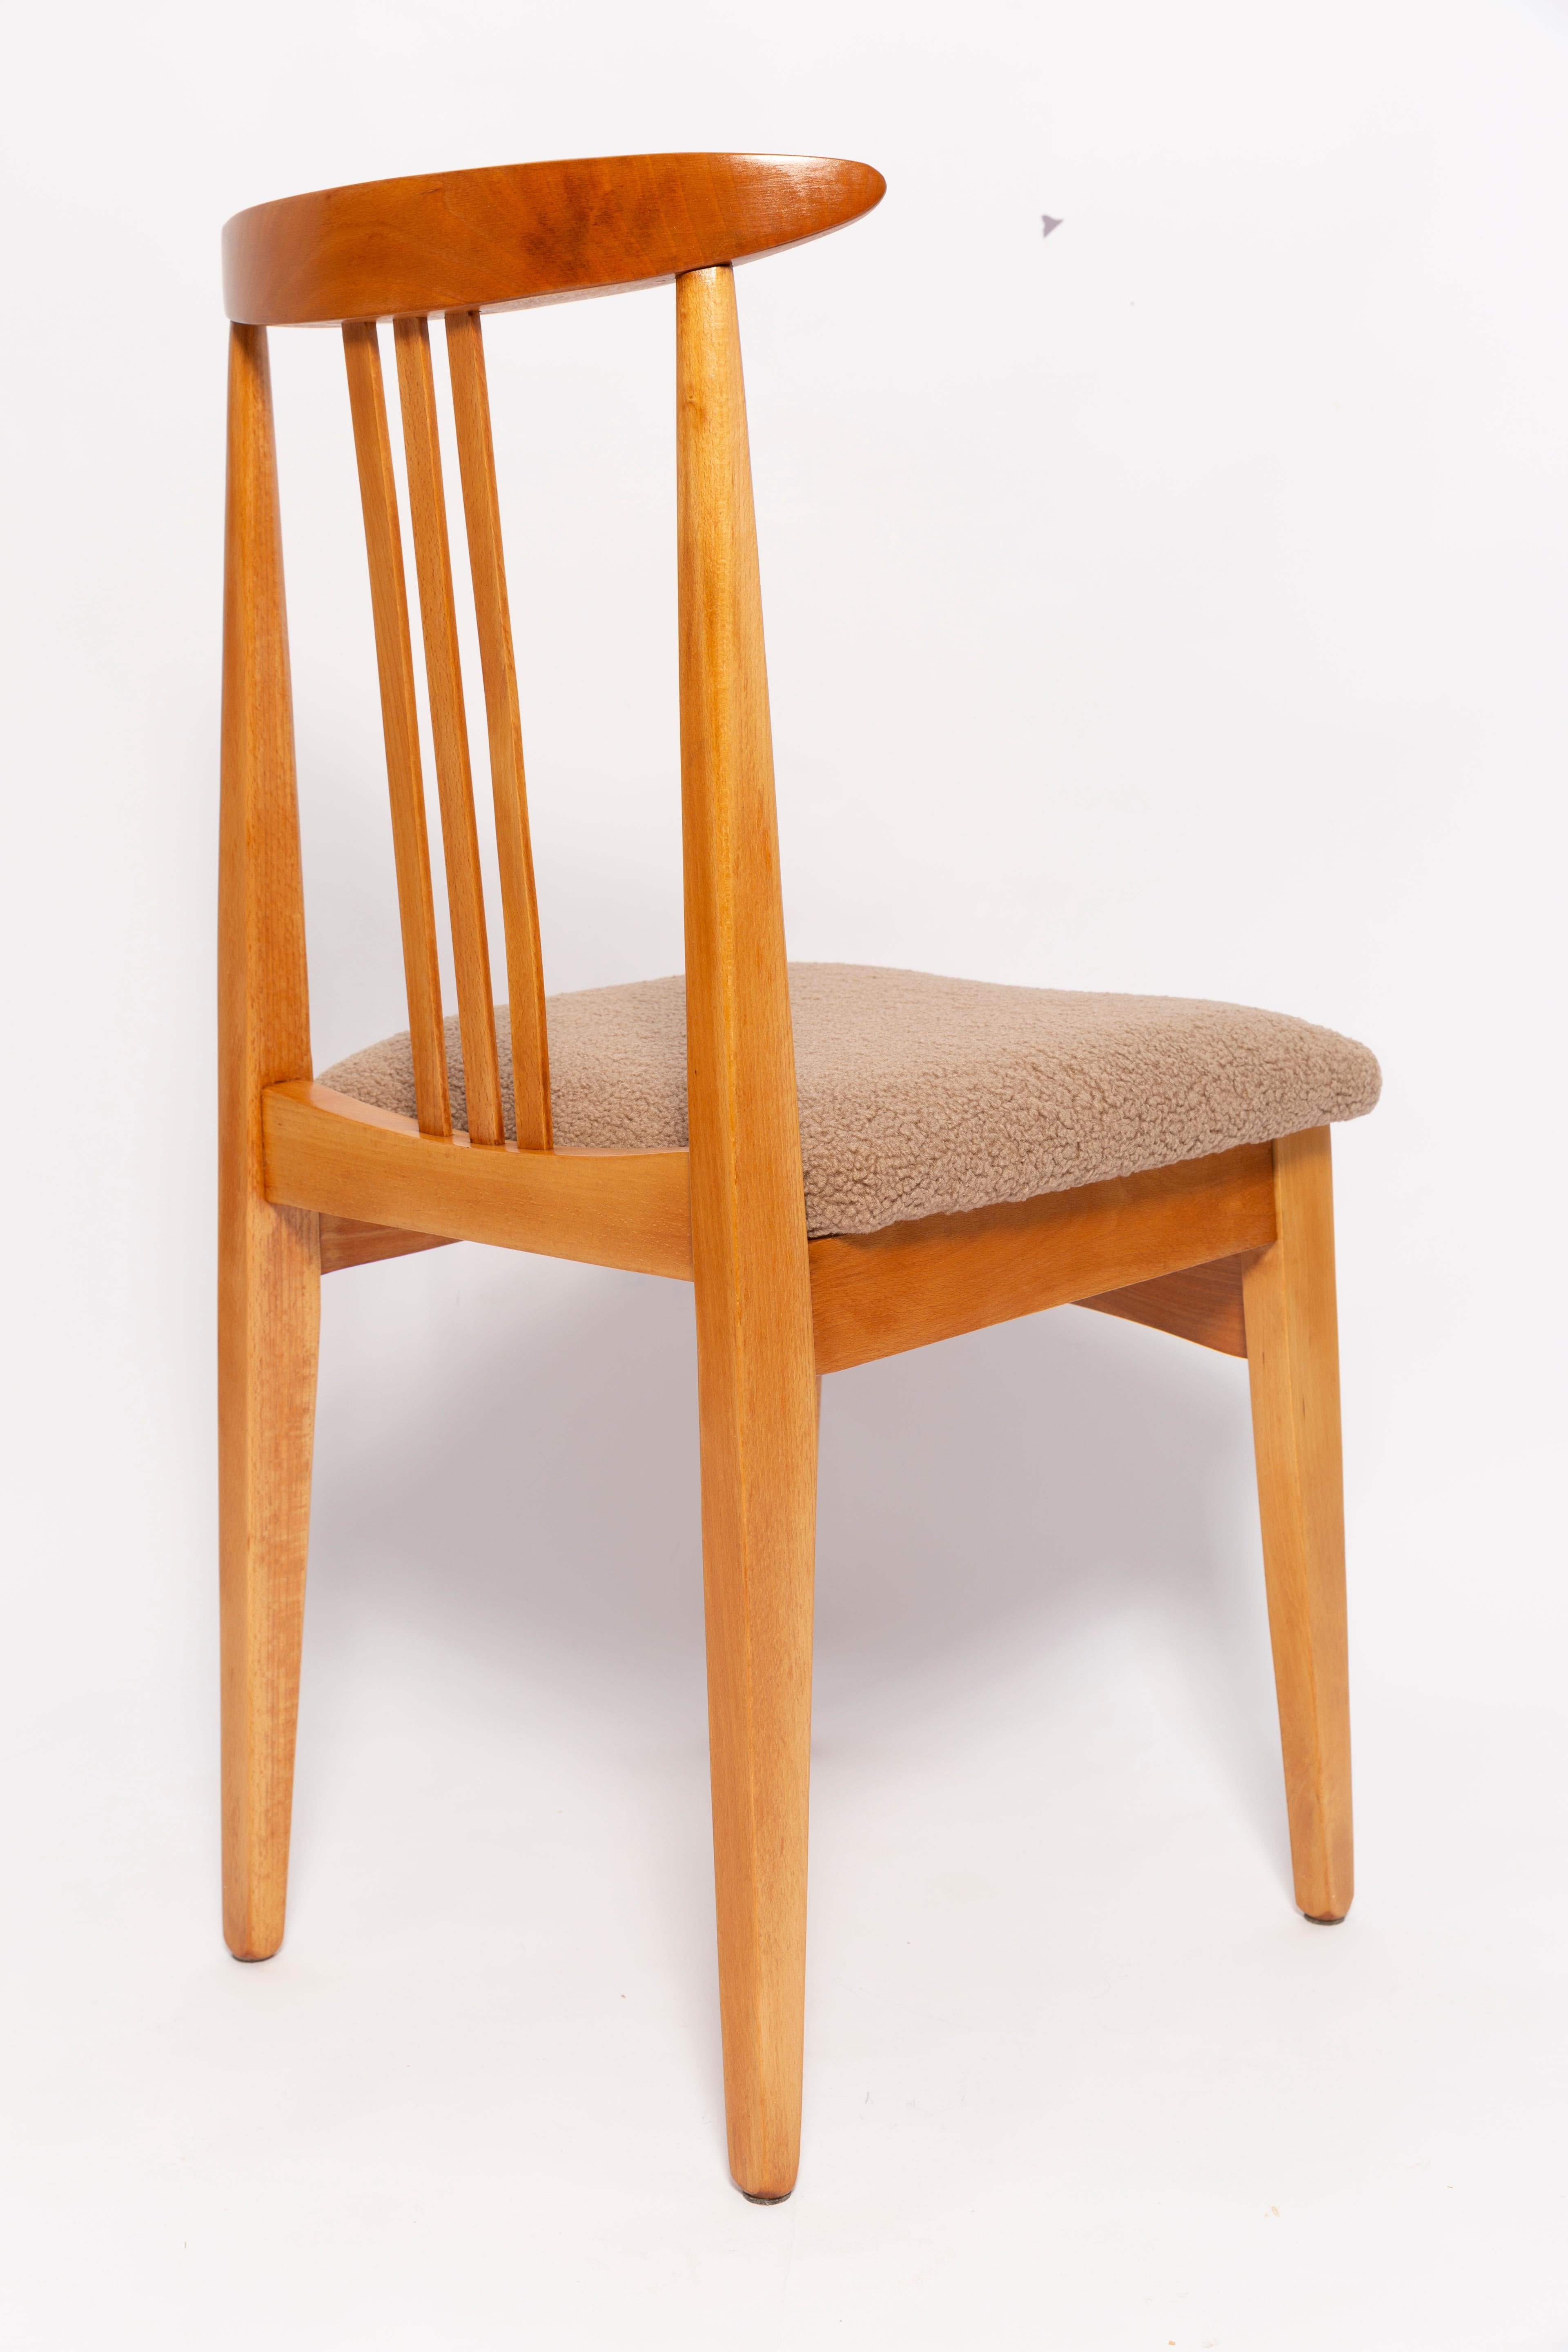 20th Century Mid-Century Latte Boucle Chair, Light Wood, M. Zielinski, Europe 1960s For Sale